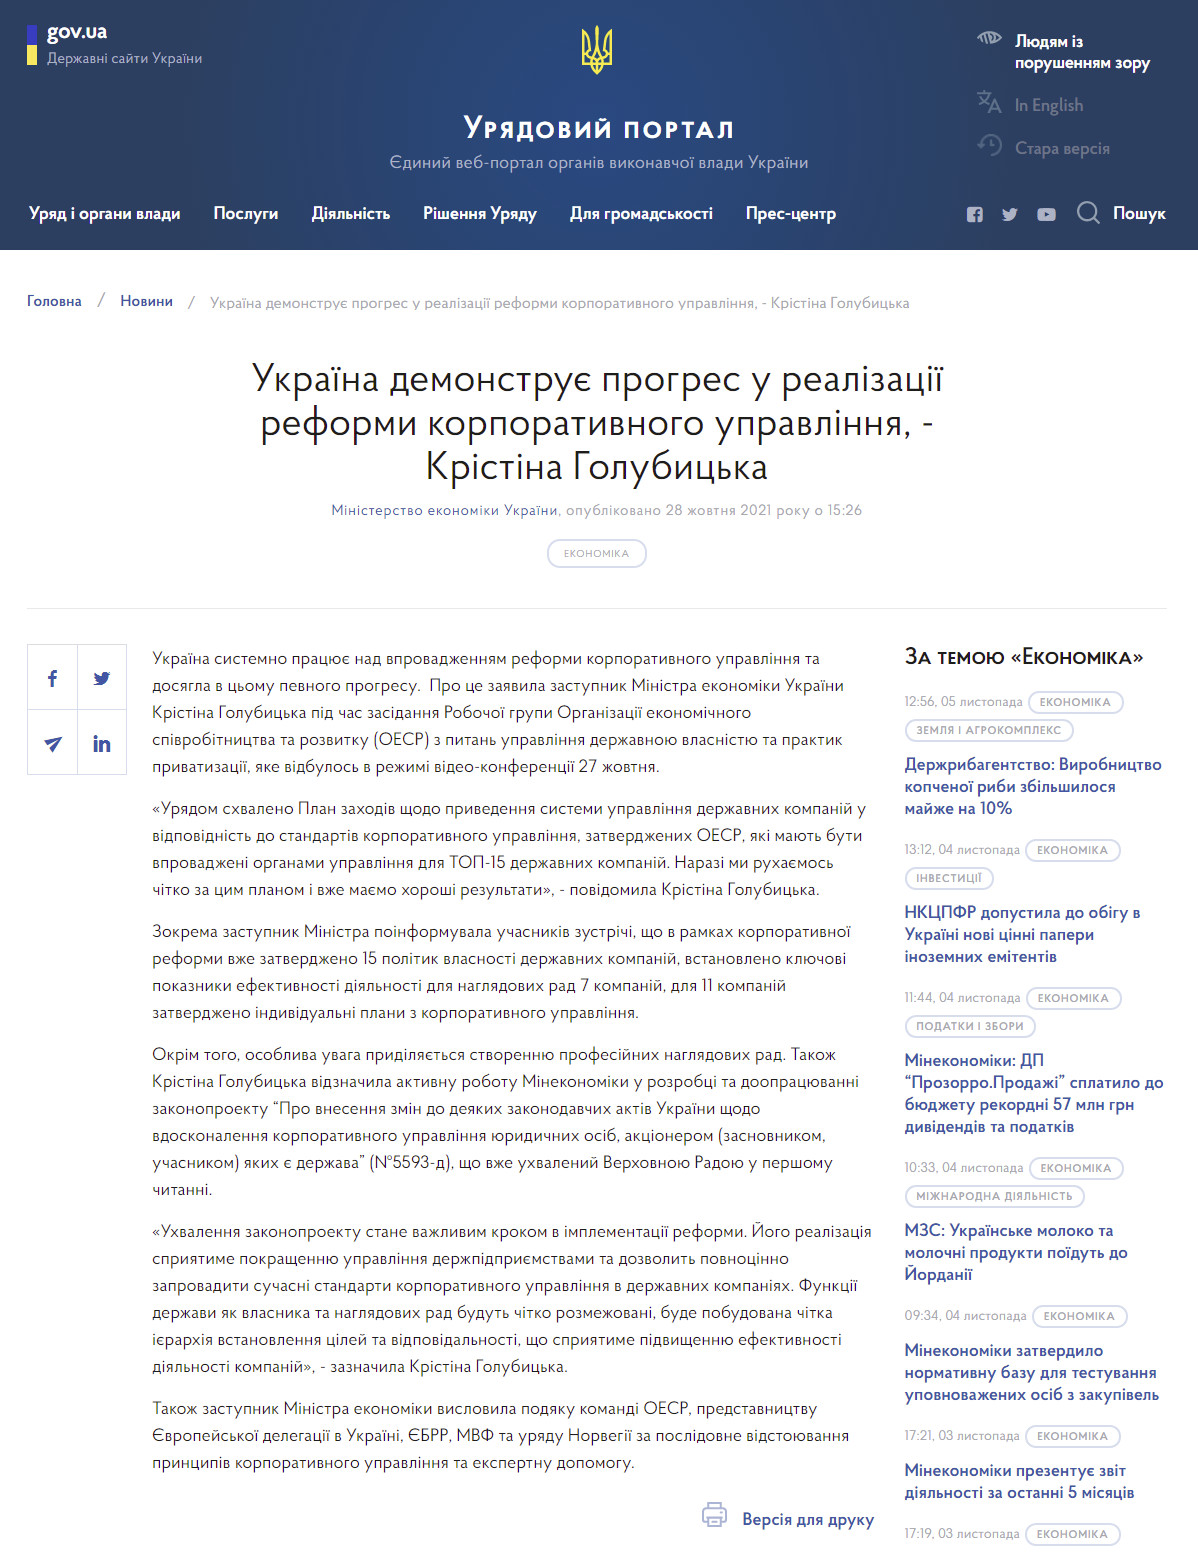 https://www.kmu.gov.ua/news/ukrayina-demonstruye-progres-u-realizaciyi-reformi-korporativnogo-upravlinnya-kristina-golubicka